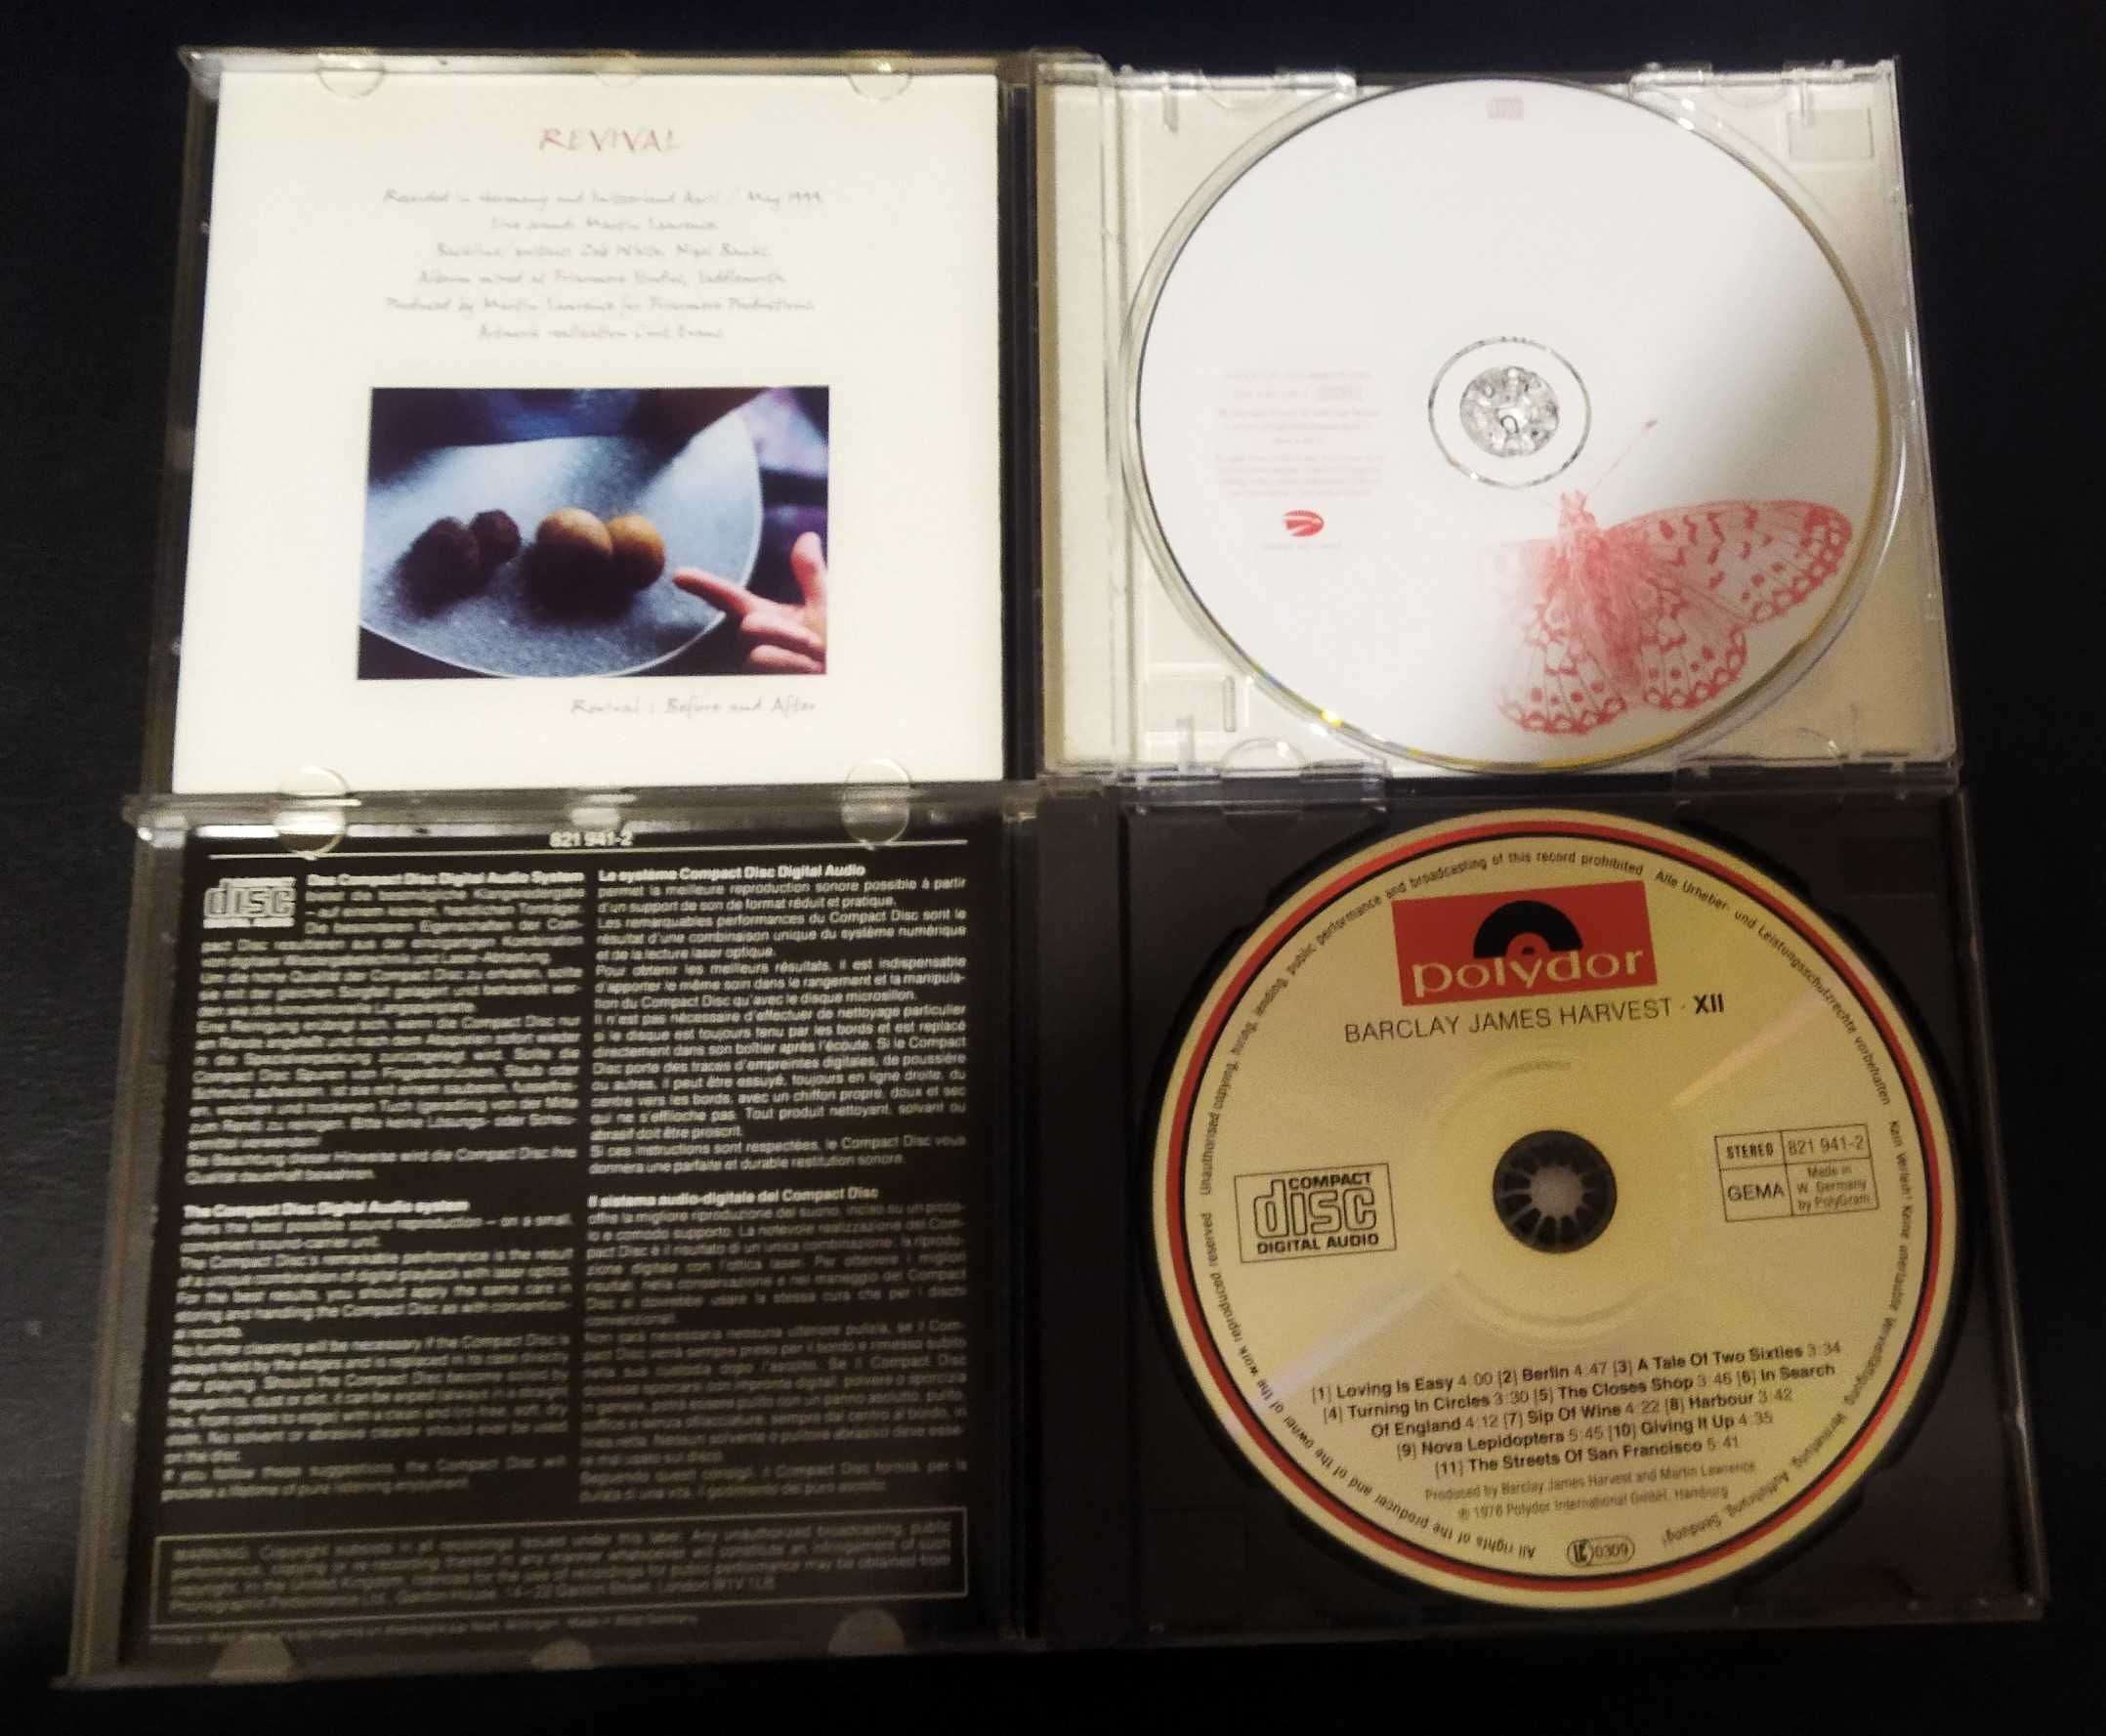 Płyta CD zespołu Barclay James Harvest "Berlin-A concert for the pe.."